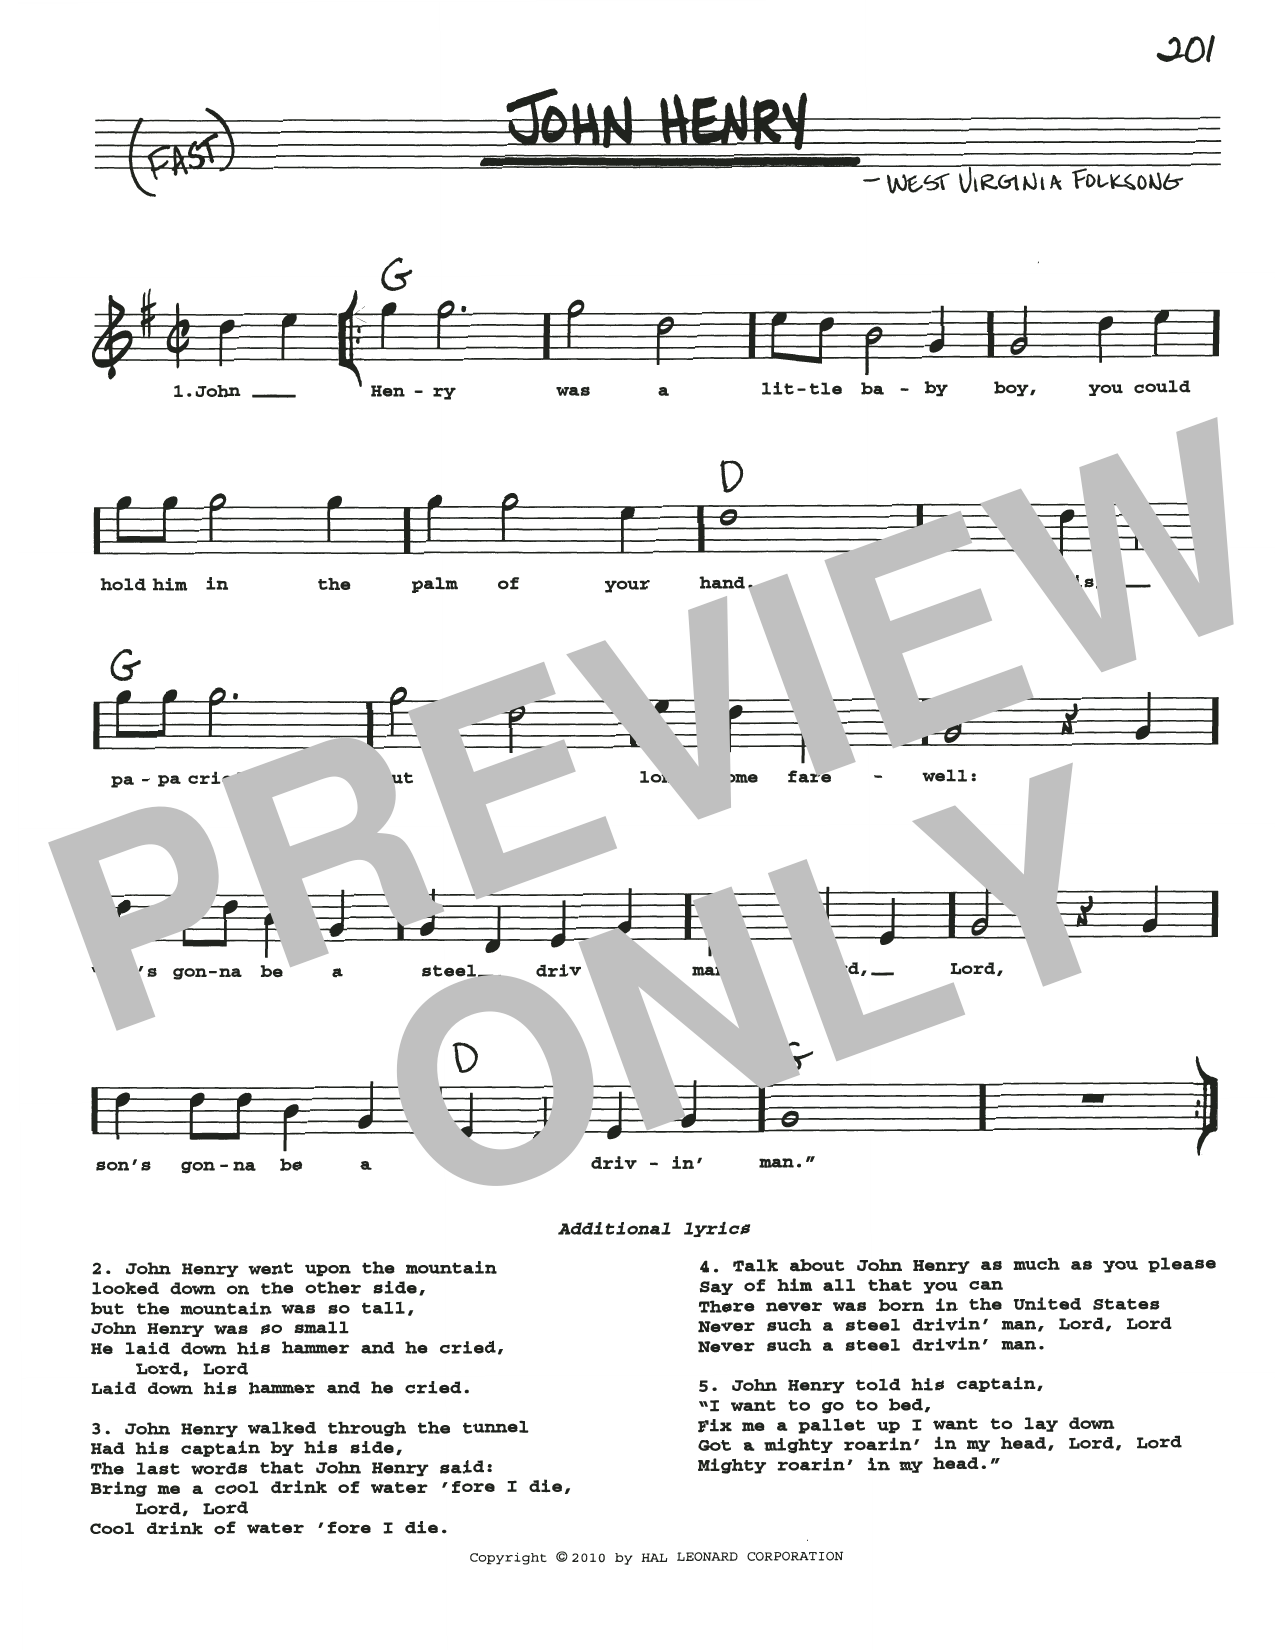 Download West Virginia Folksong John Henry Sheet Music